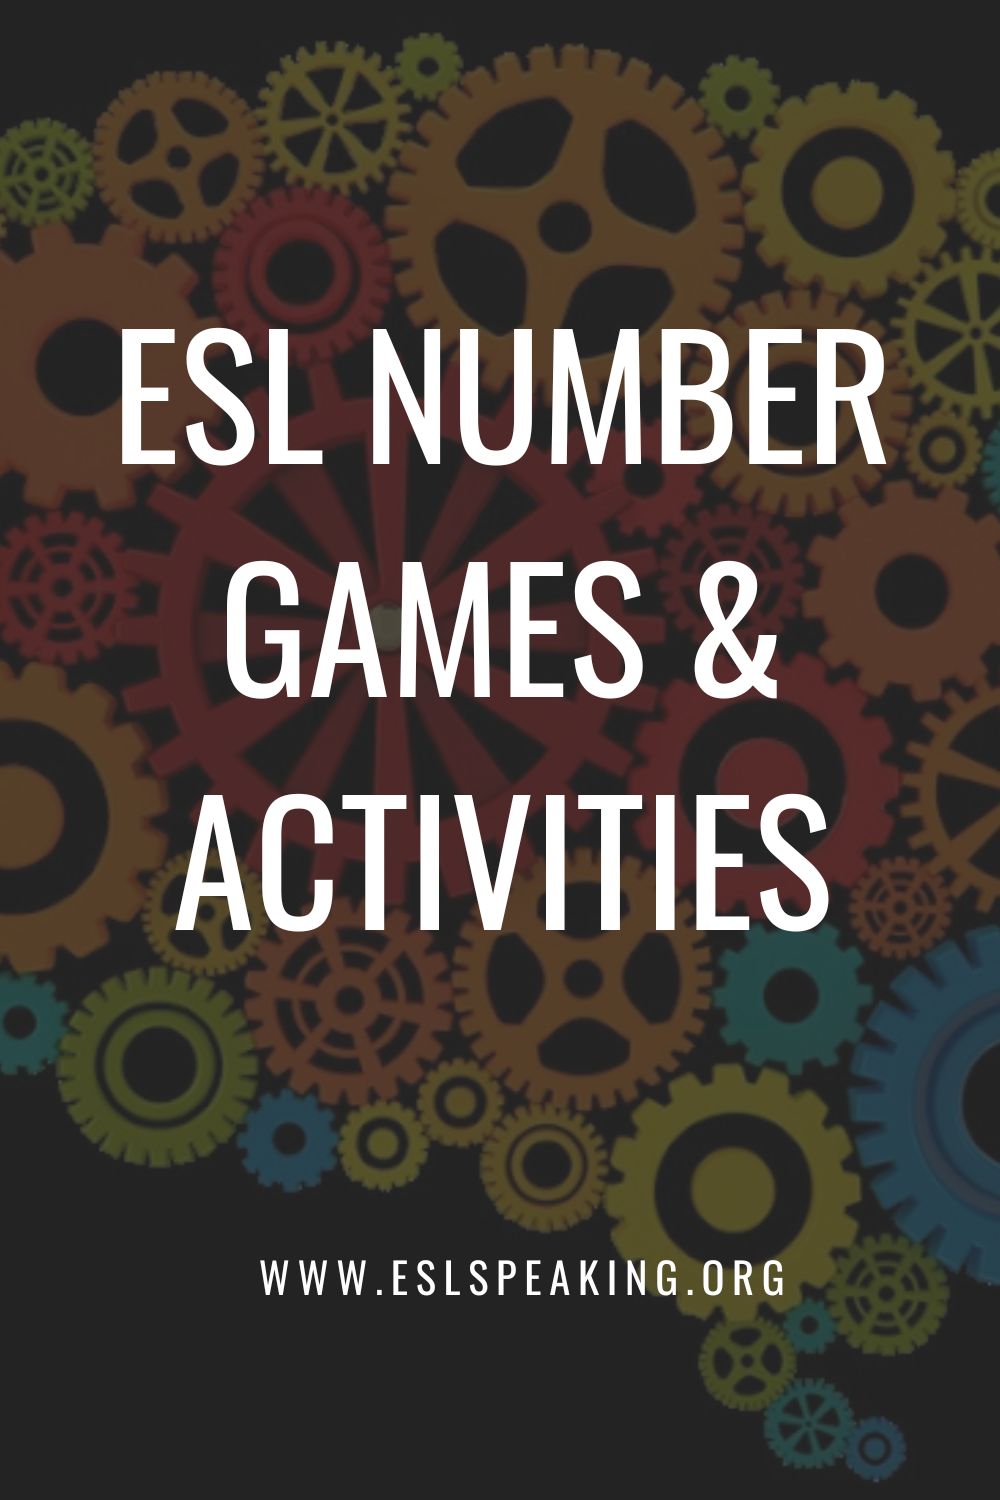 Teaching Materials for ESL, Math & Education - ESL Board Games